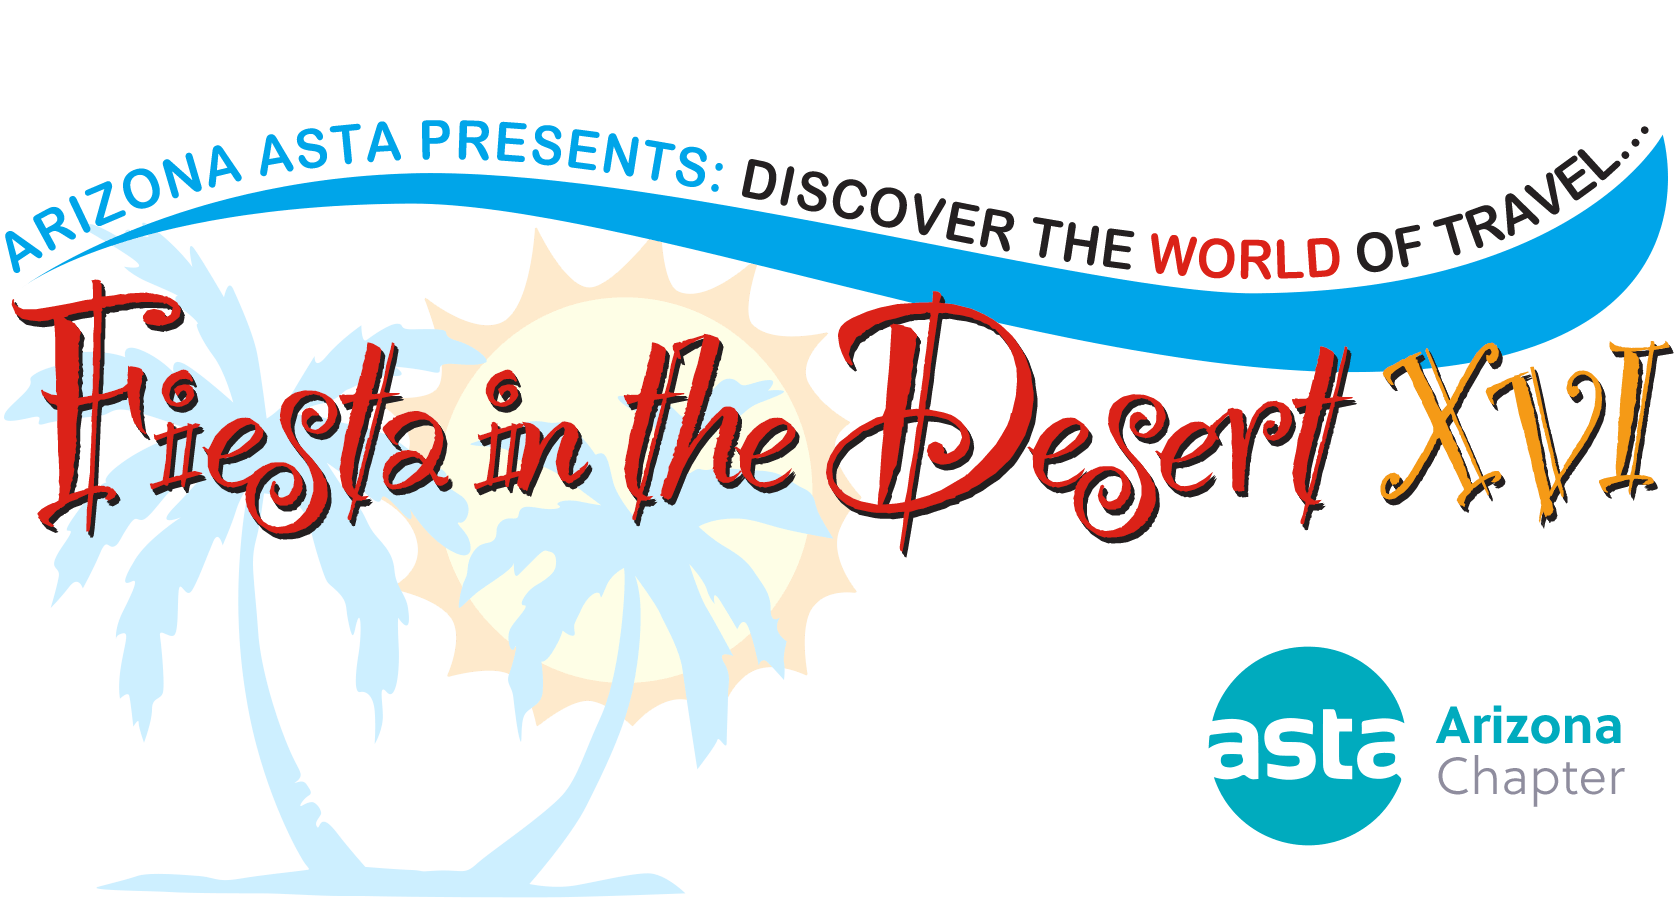 Arizona ASTA Fiesta in the Desert XVI 2019 Friday Presentation Trainings